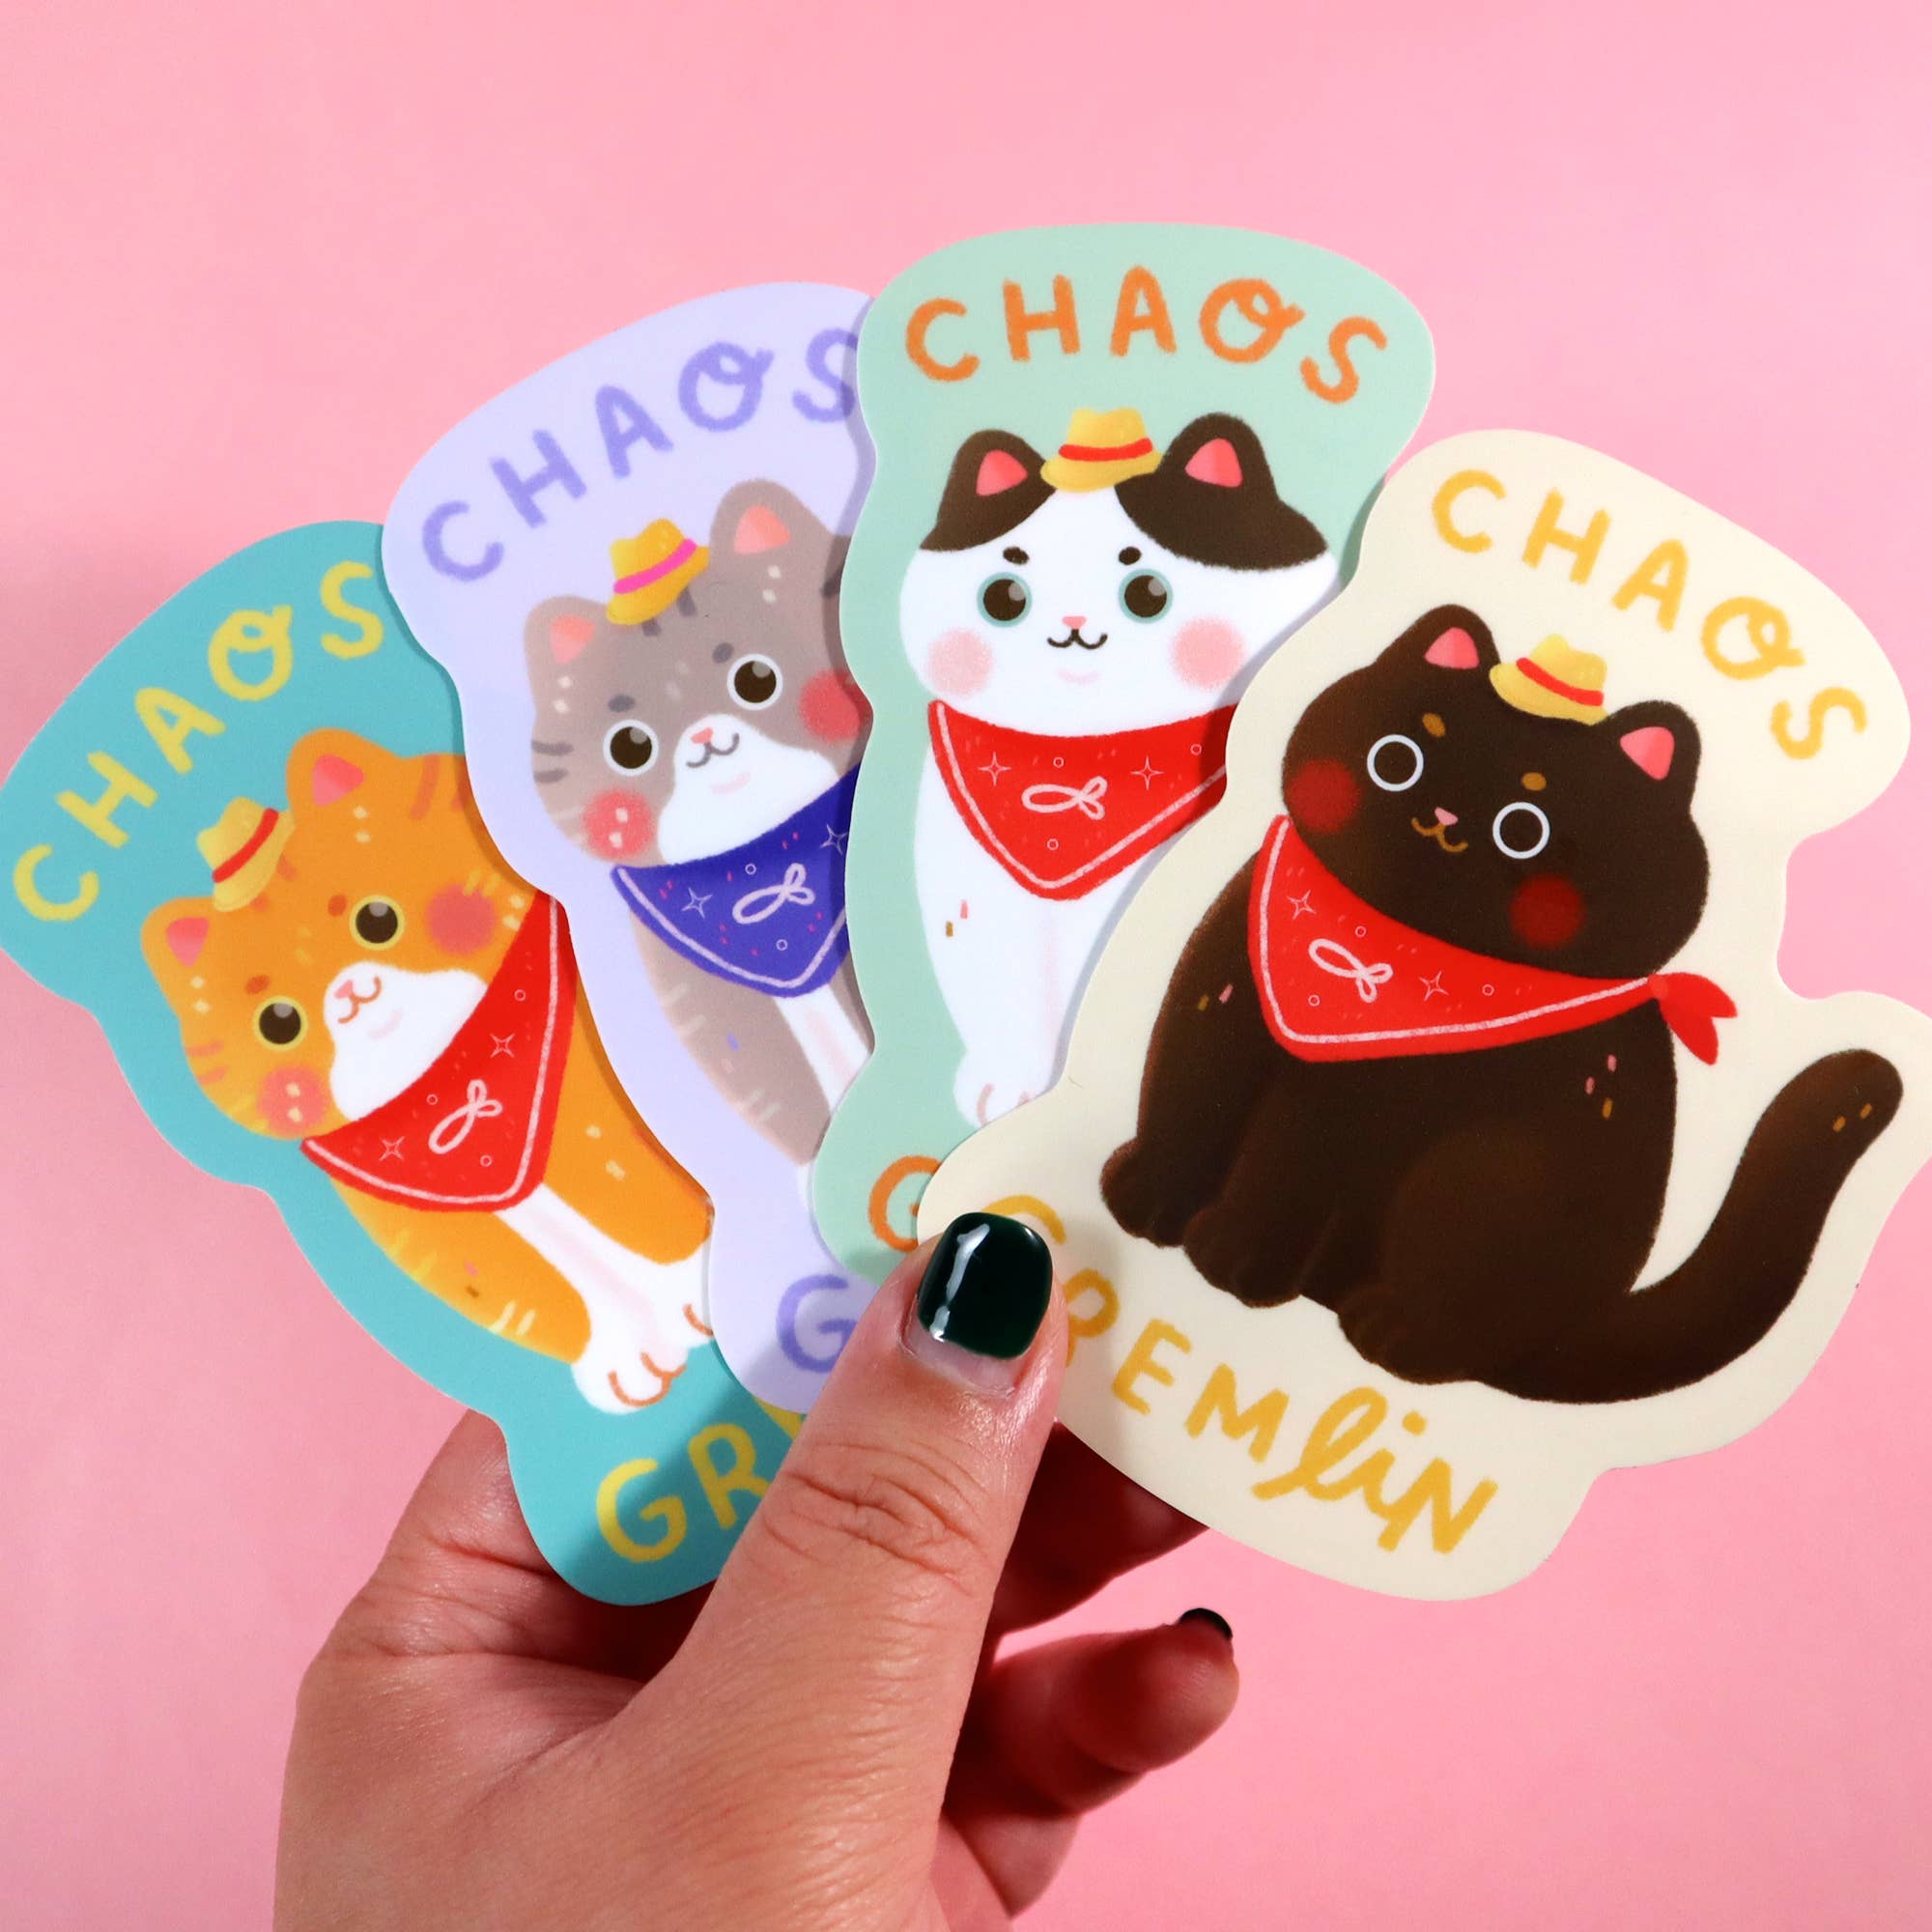 Chaos Gremlin Cat Stickers: Black Cat